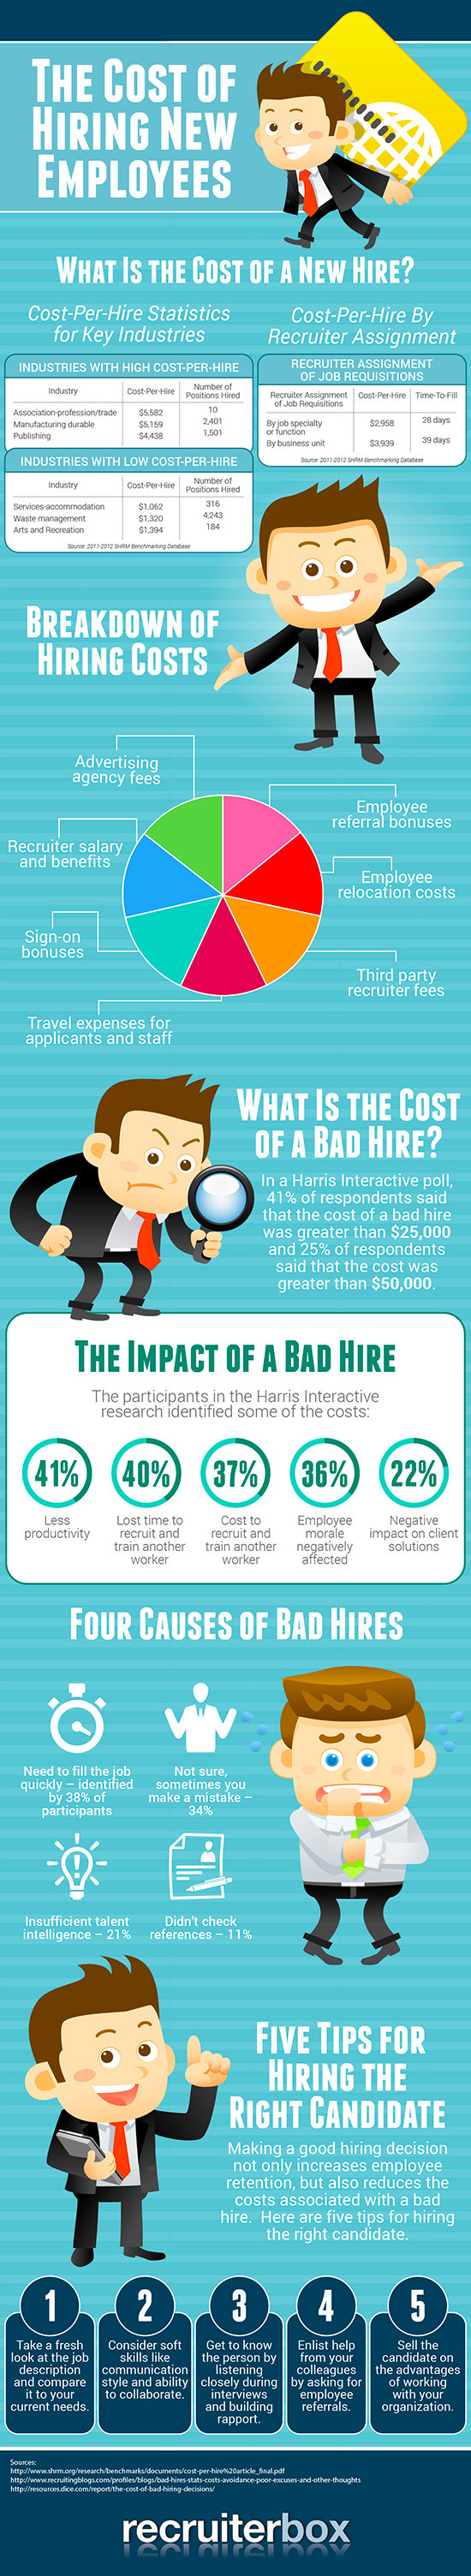 New employee hiring costs - infographic